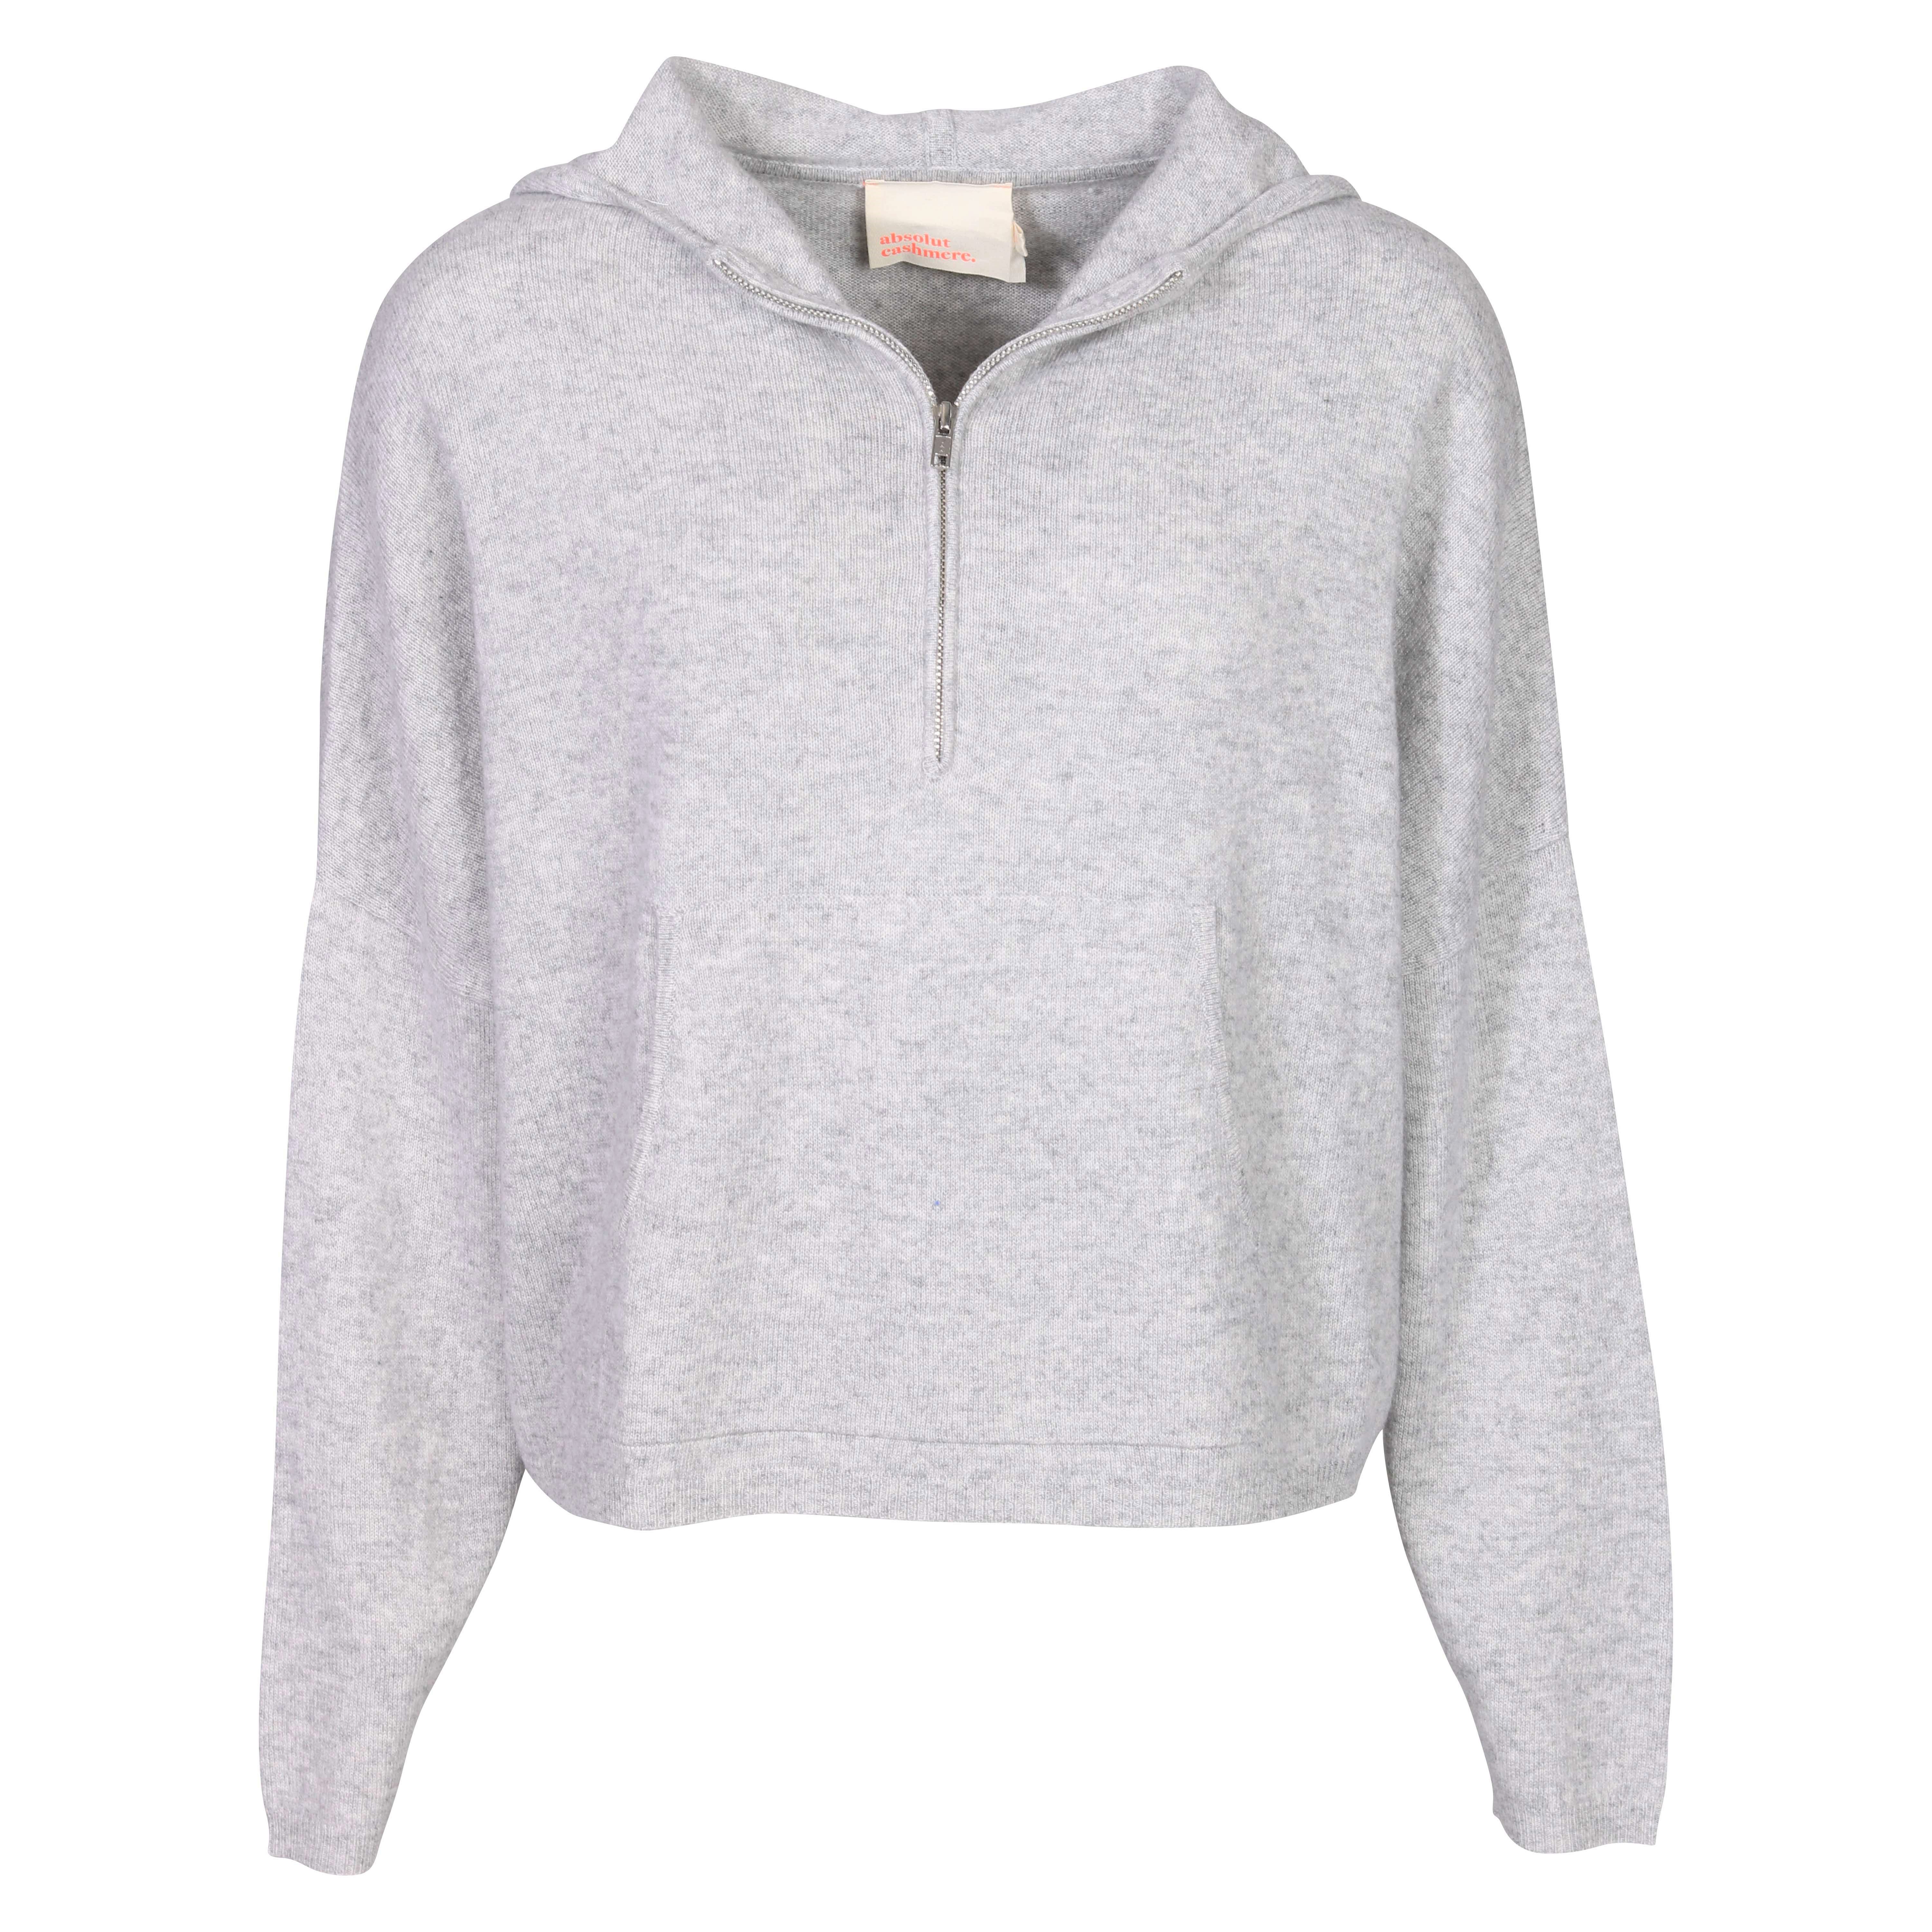 Absolut Cashmere Half Zip Hodded Sweater in Light Grey Melange M